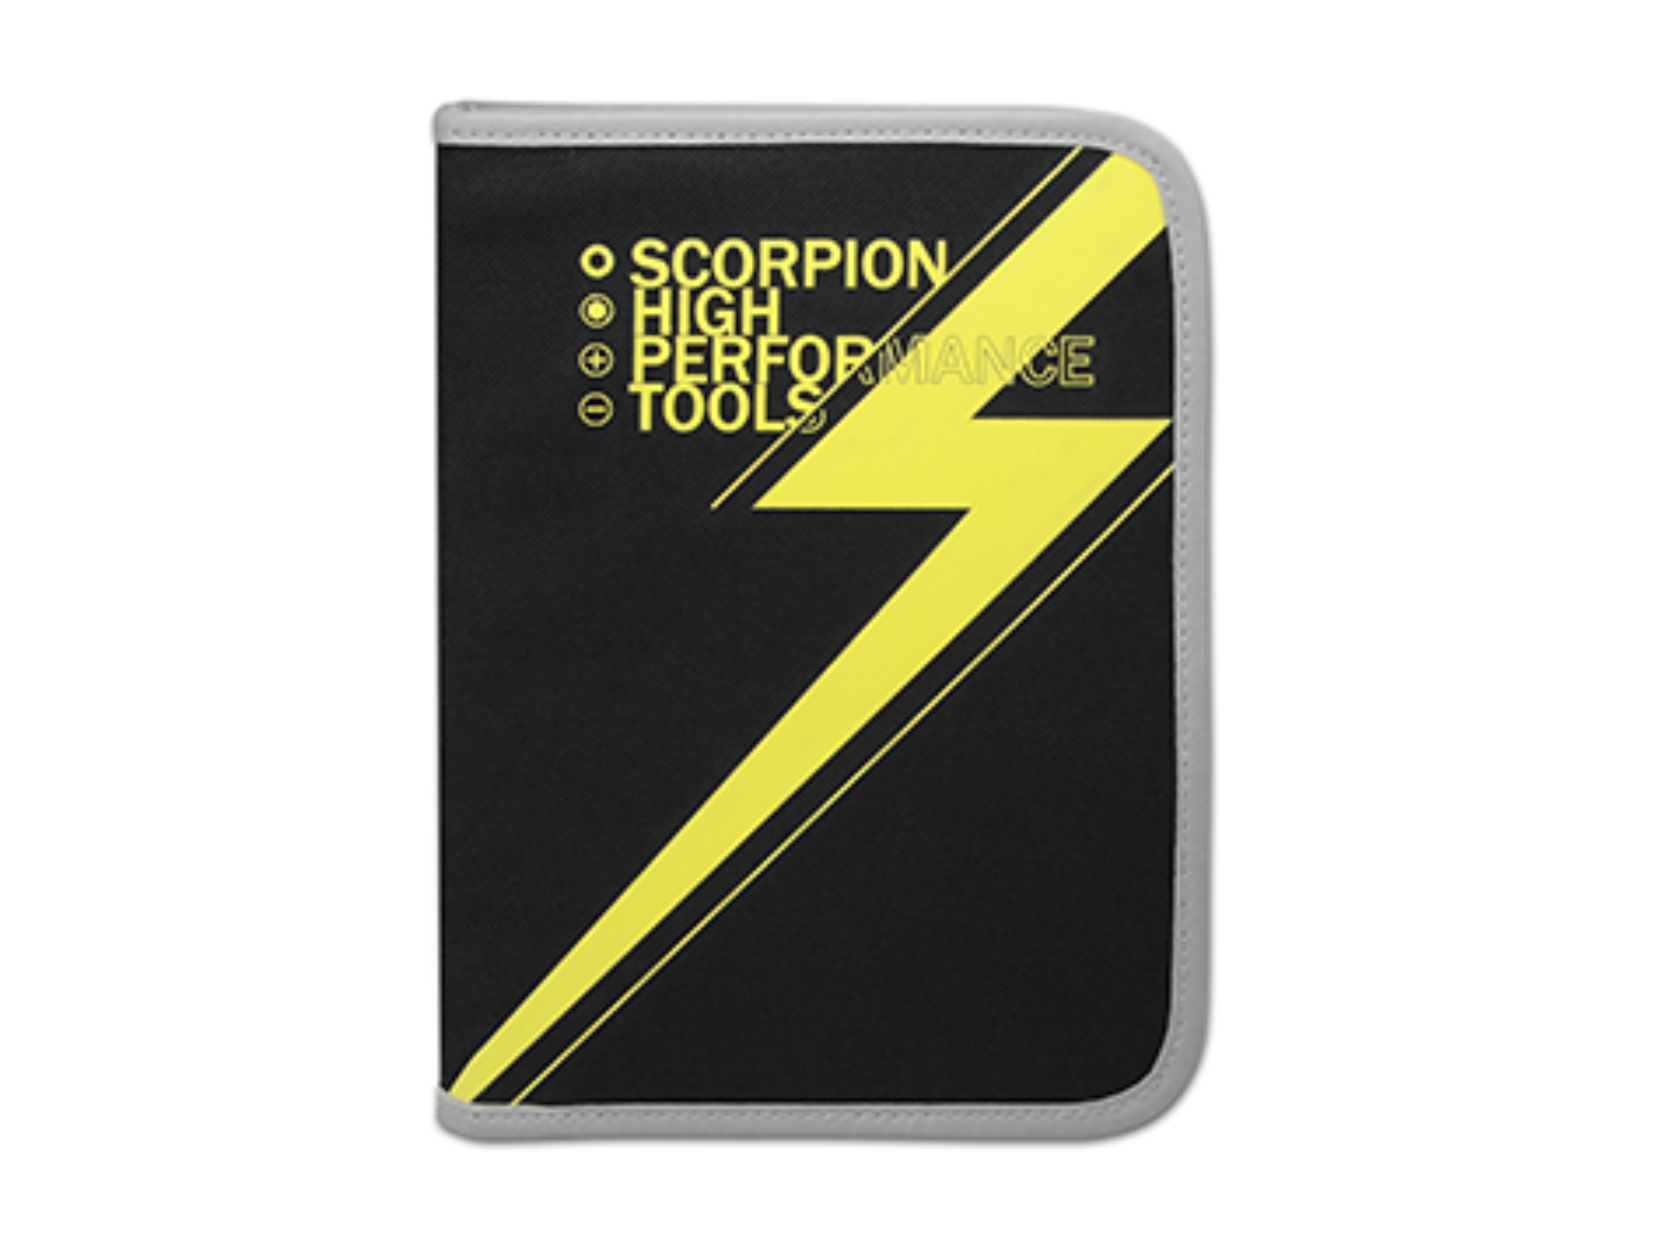 Scorpion High Performance Tools Bag (16)